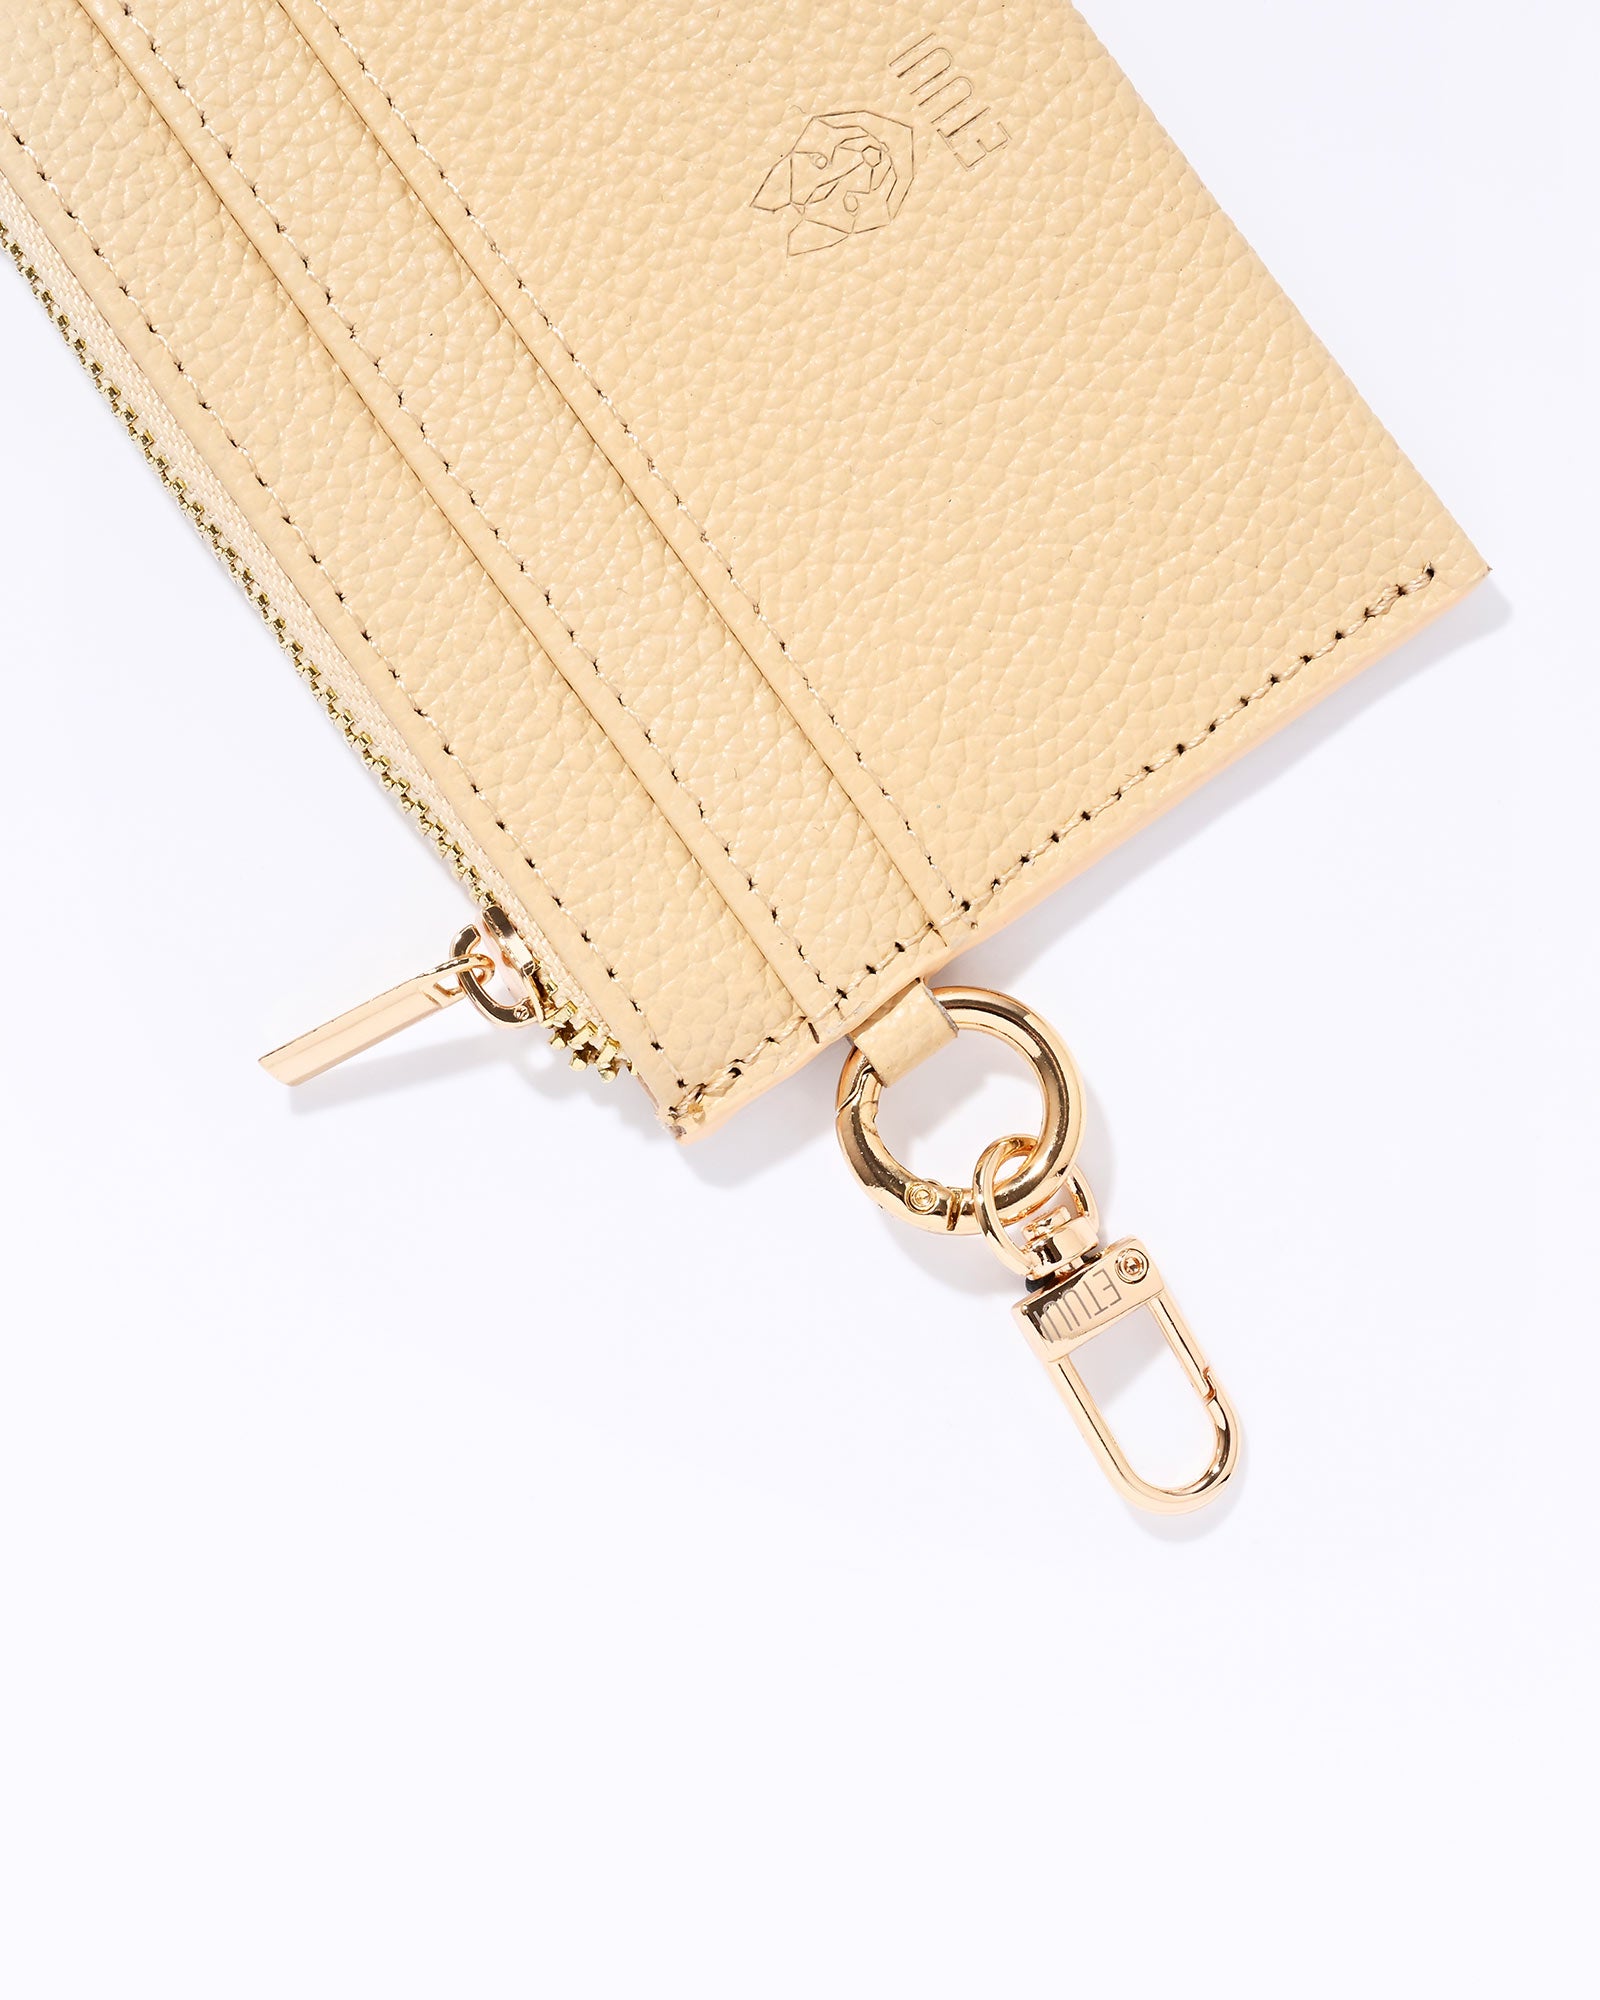 Clip Card Holder with Zipper - Beige Gold